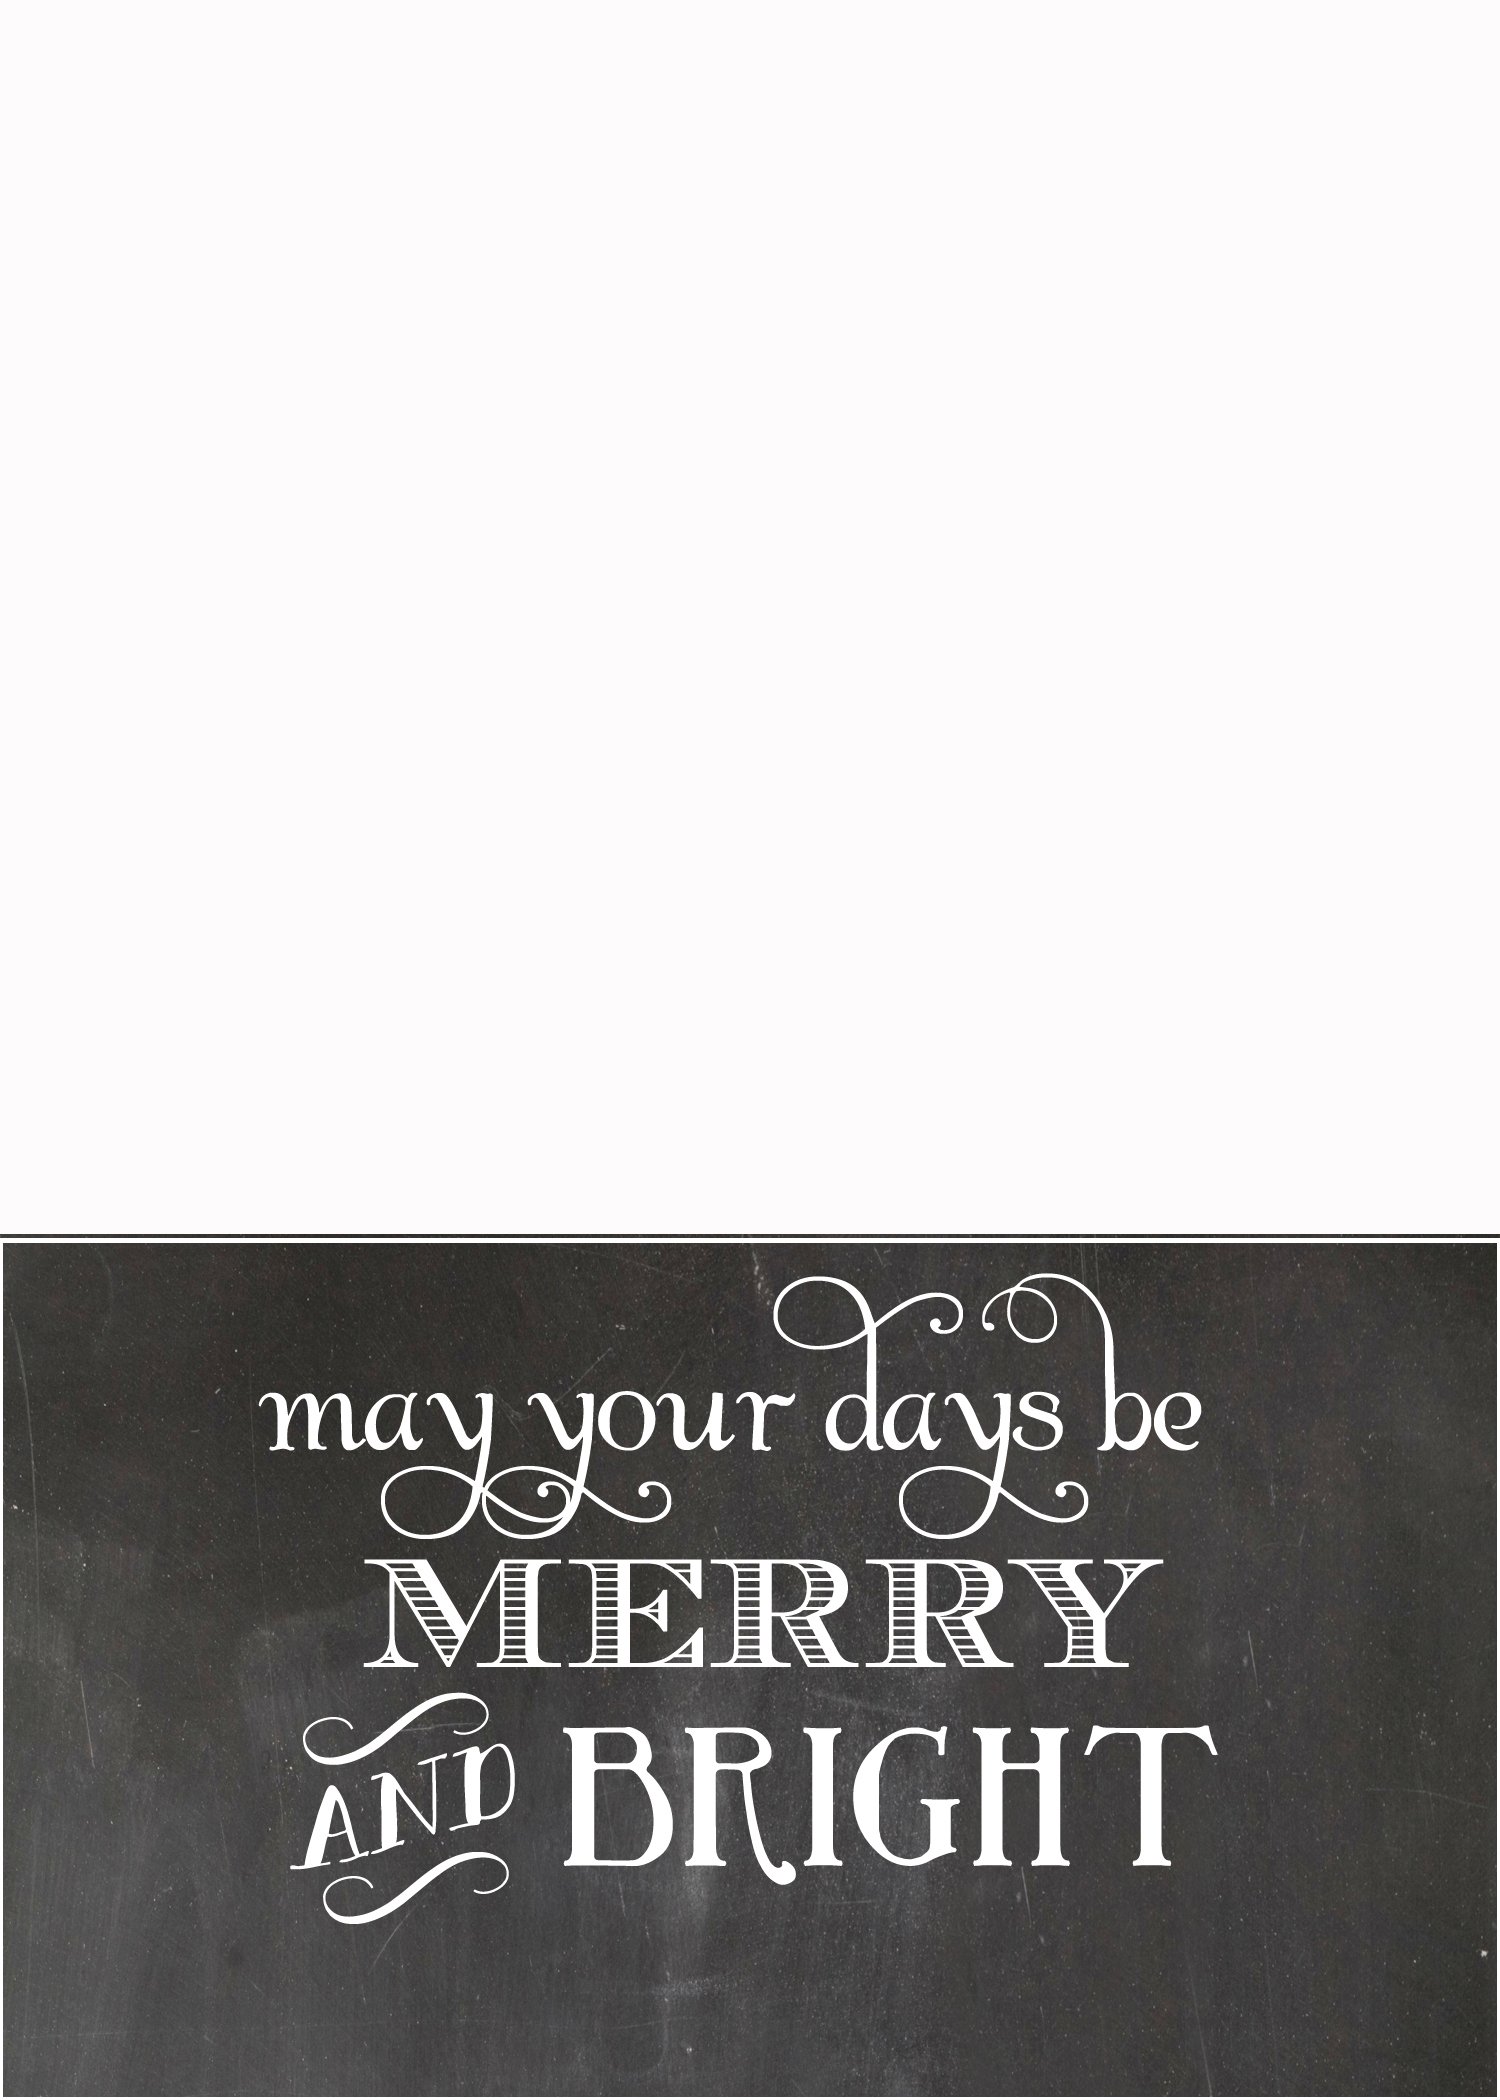 FREE Chalkboard Christmas Card Templates  simplykierste.com